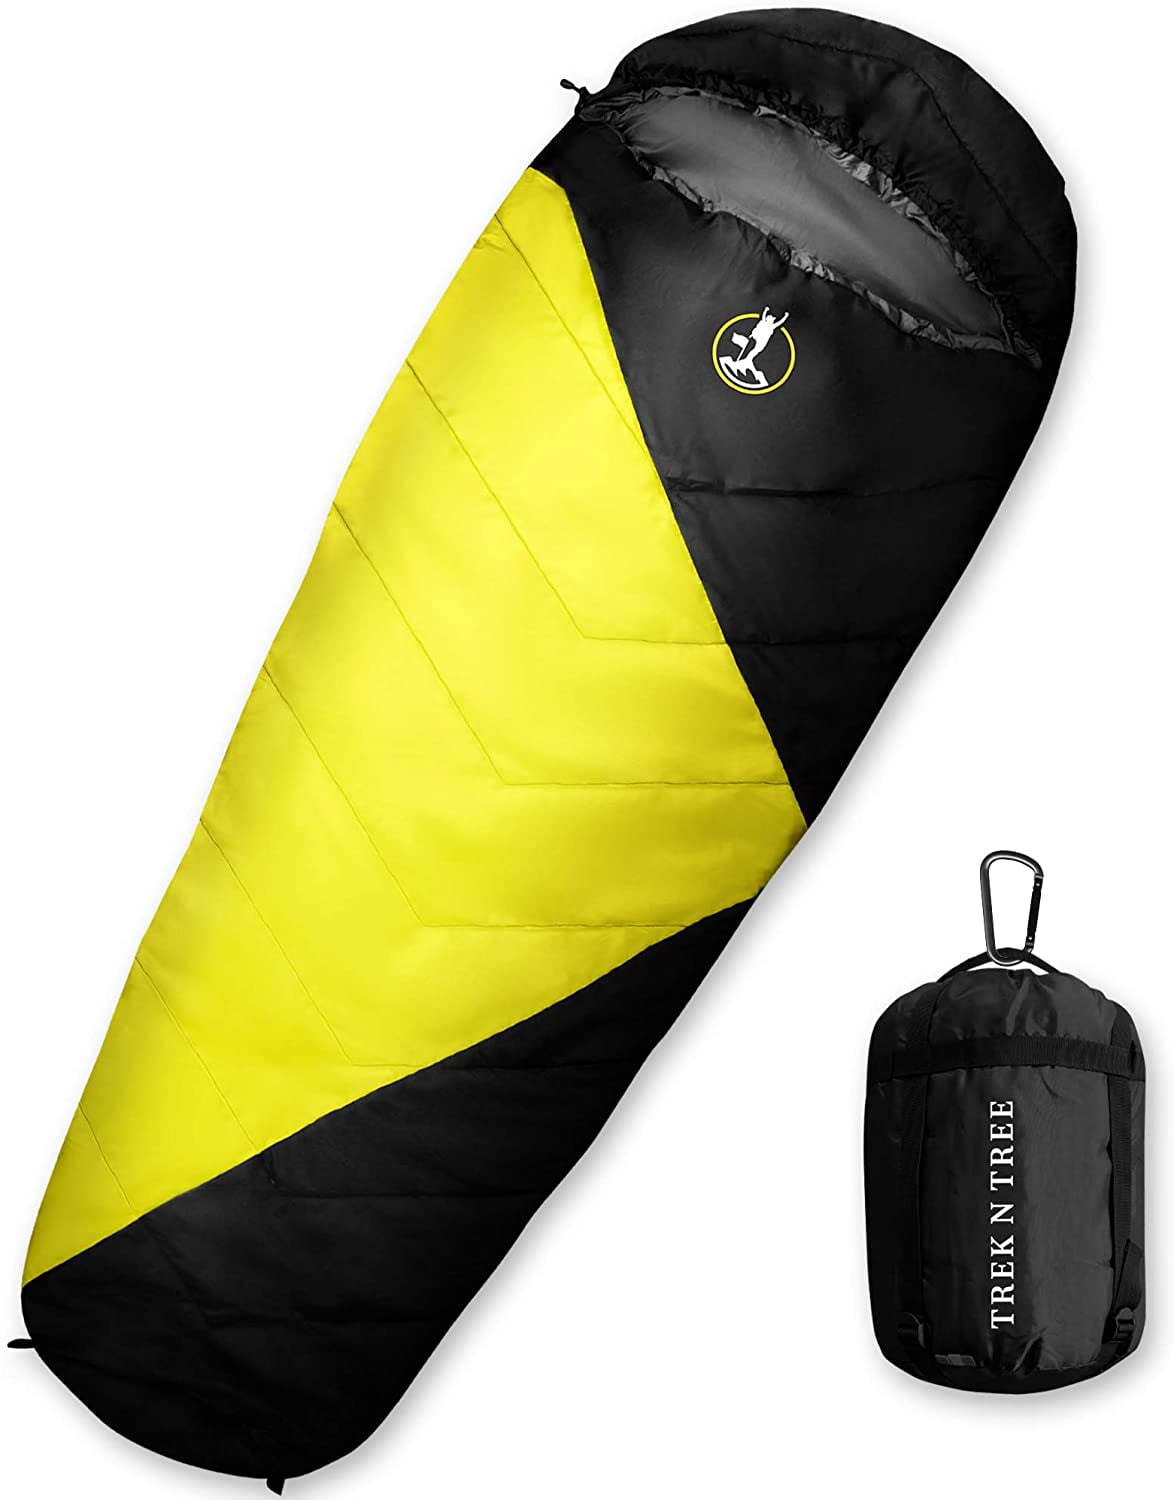 2 Season Mummy Sleeping Bag Single Adult Camping Hiking Suit Case Waterproof 